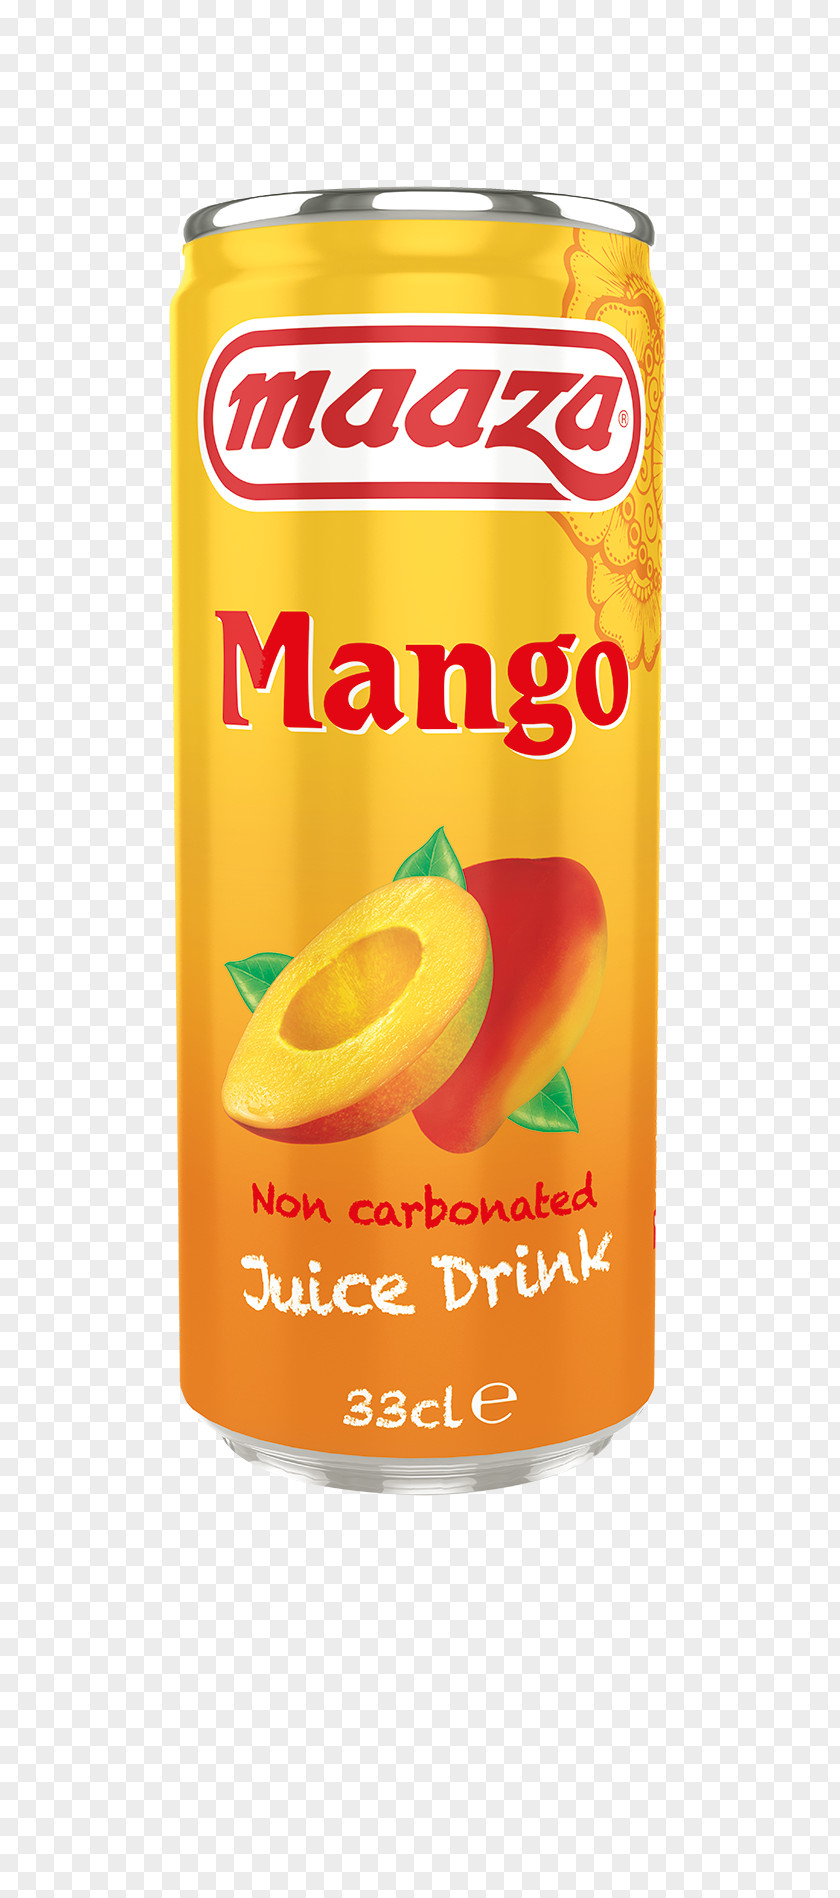 Juice Orange Drink Maaza Mango Beverage Can PNG